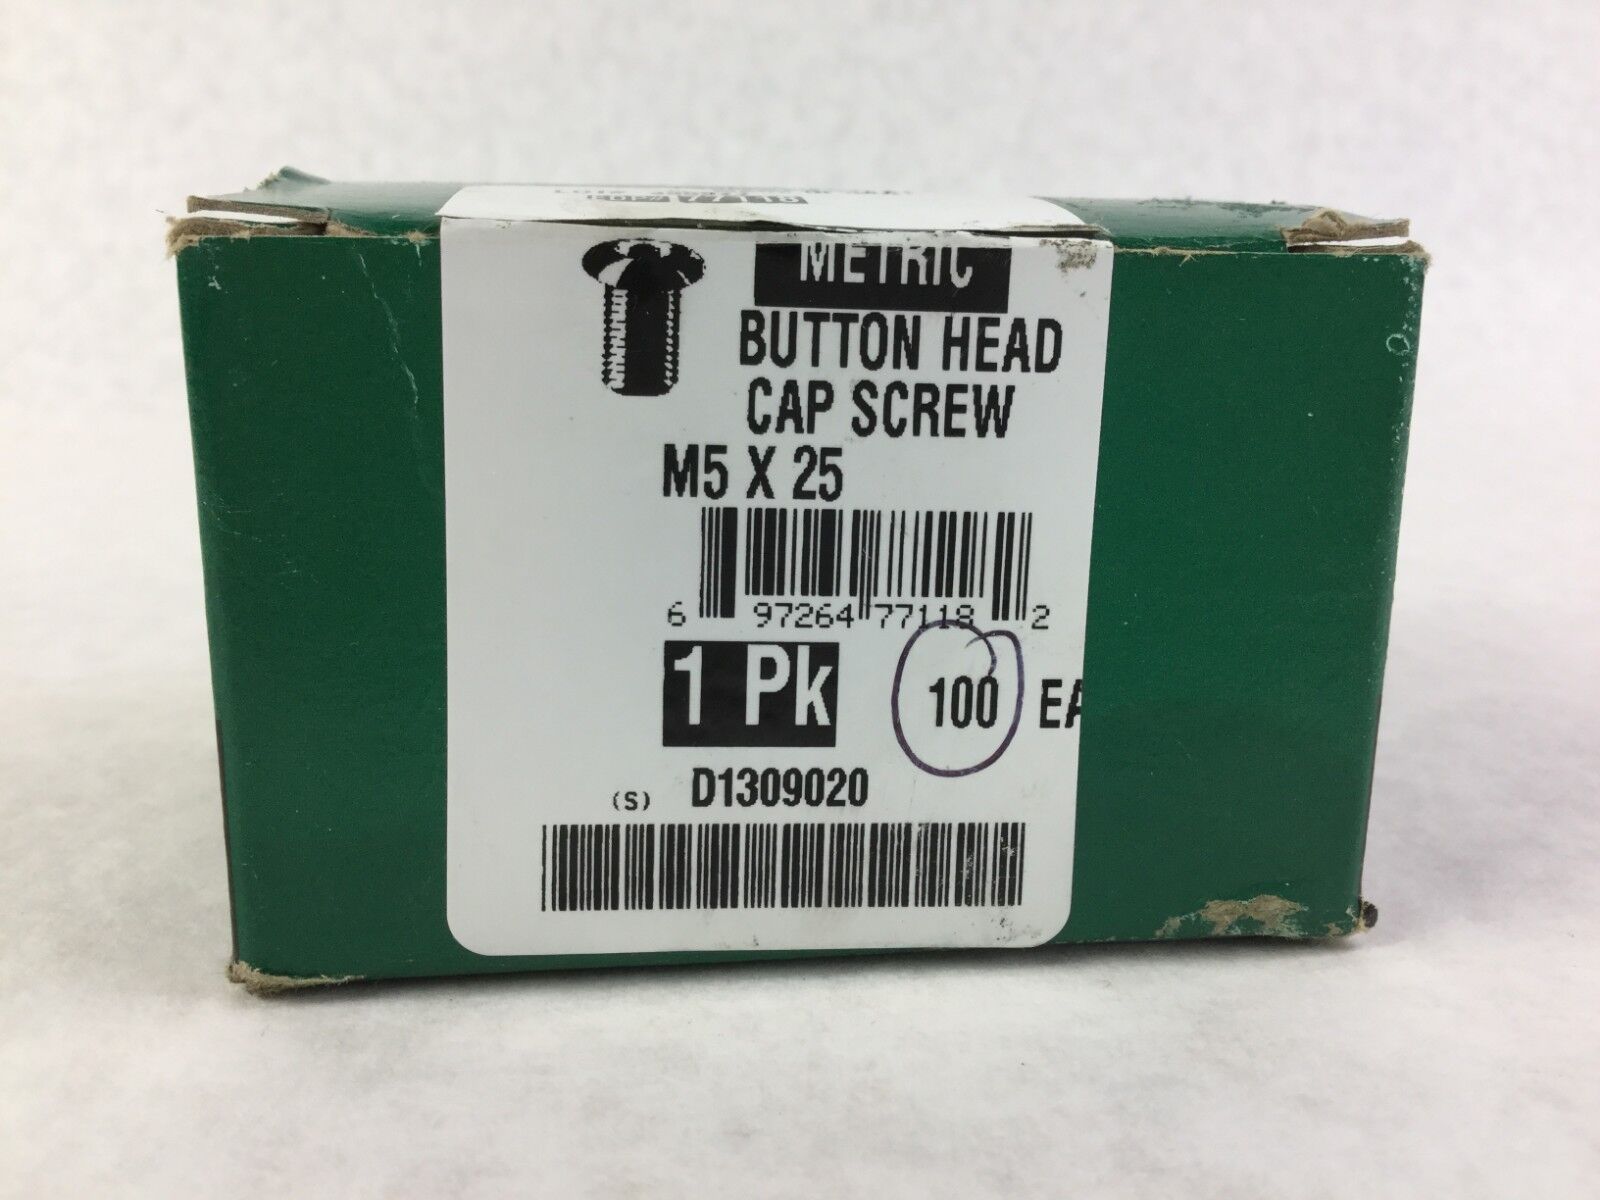 M5 x 25 Button Head Cap Screws Metric Box of 100